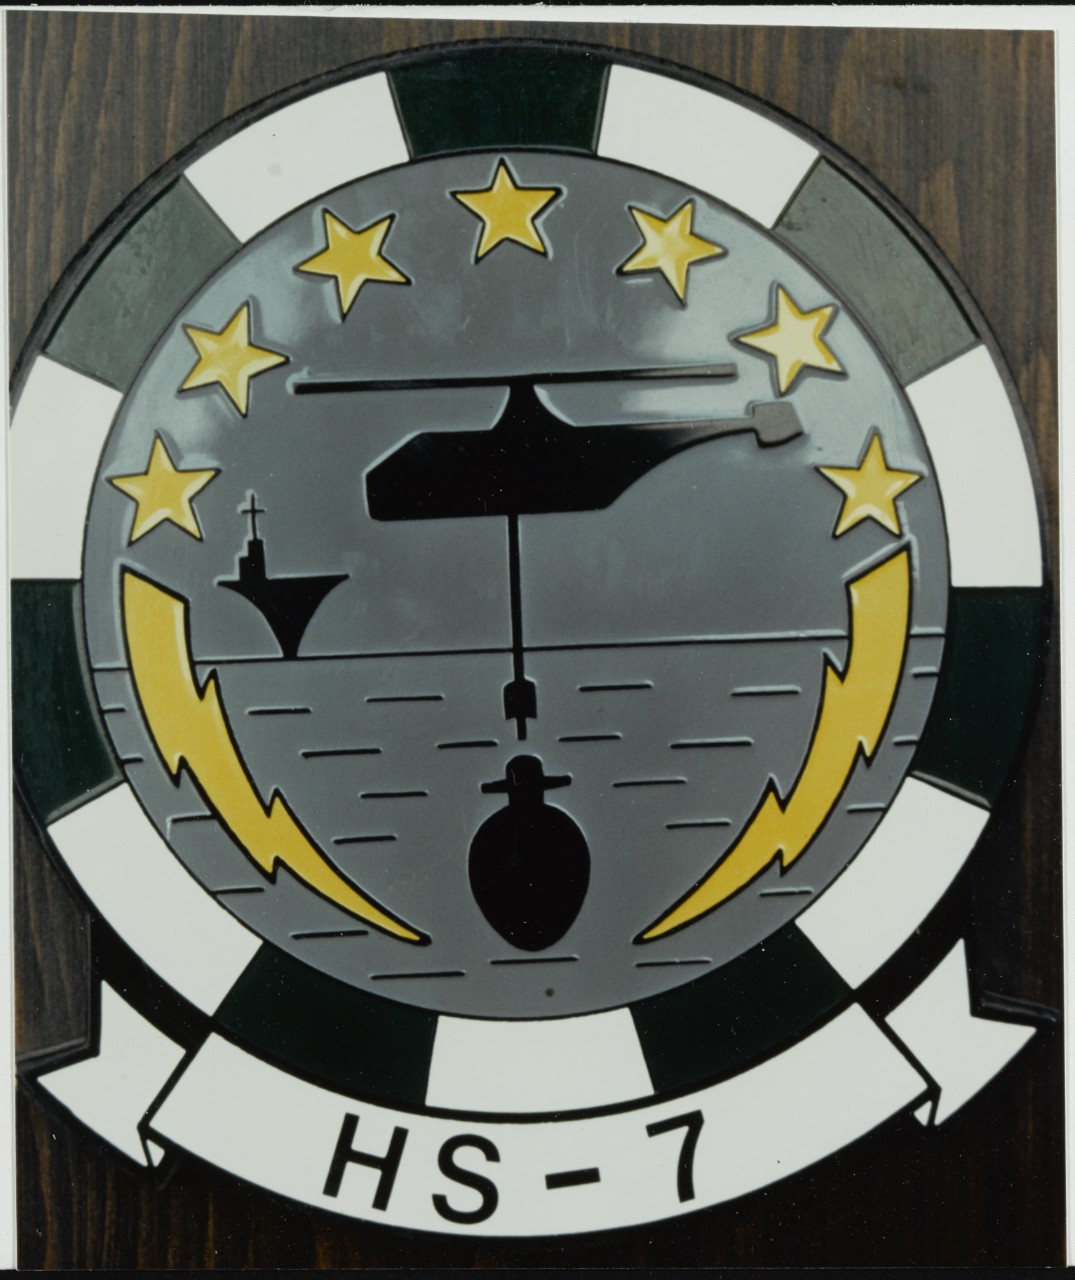 Insignia: Helicopter Anti-Submarine Squadron Seven (HS-7)